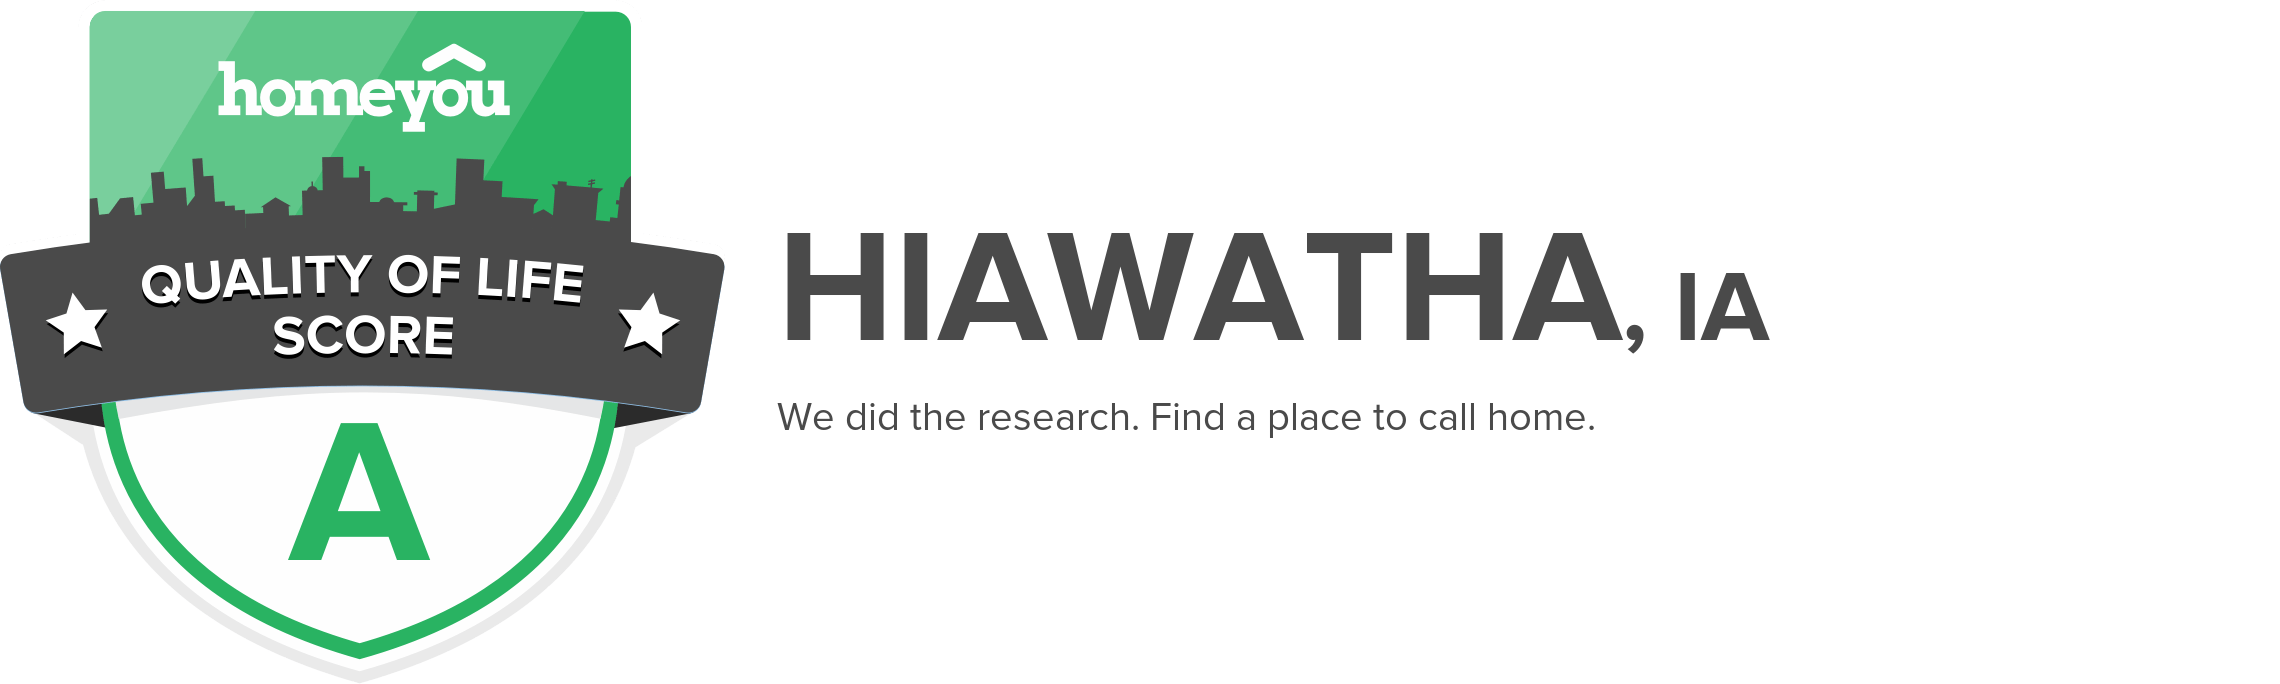 Hiawatha, IA